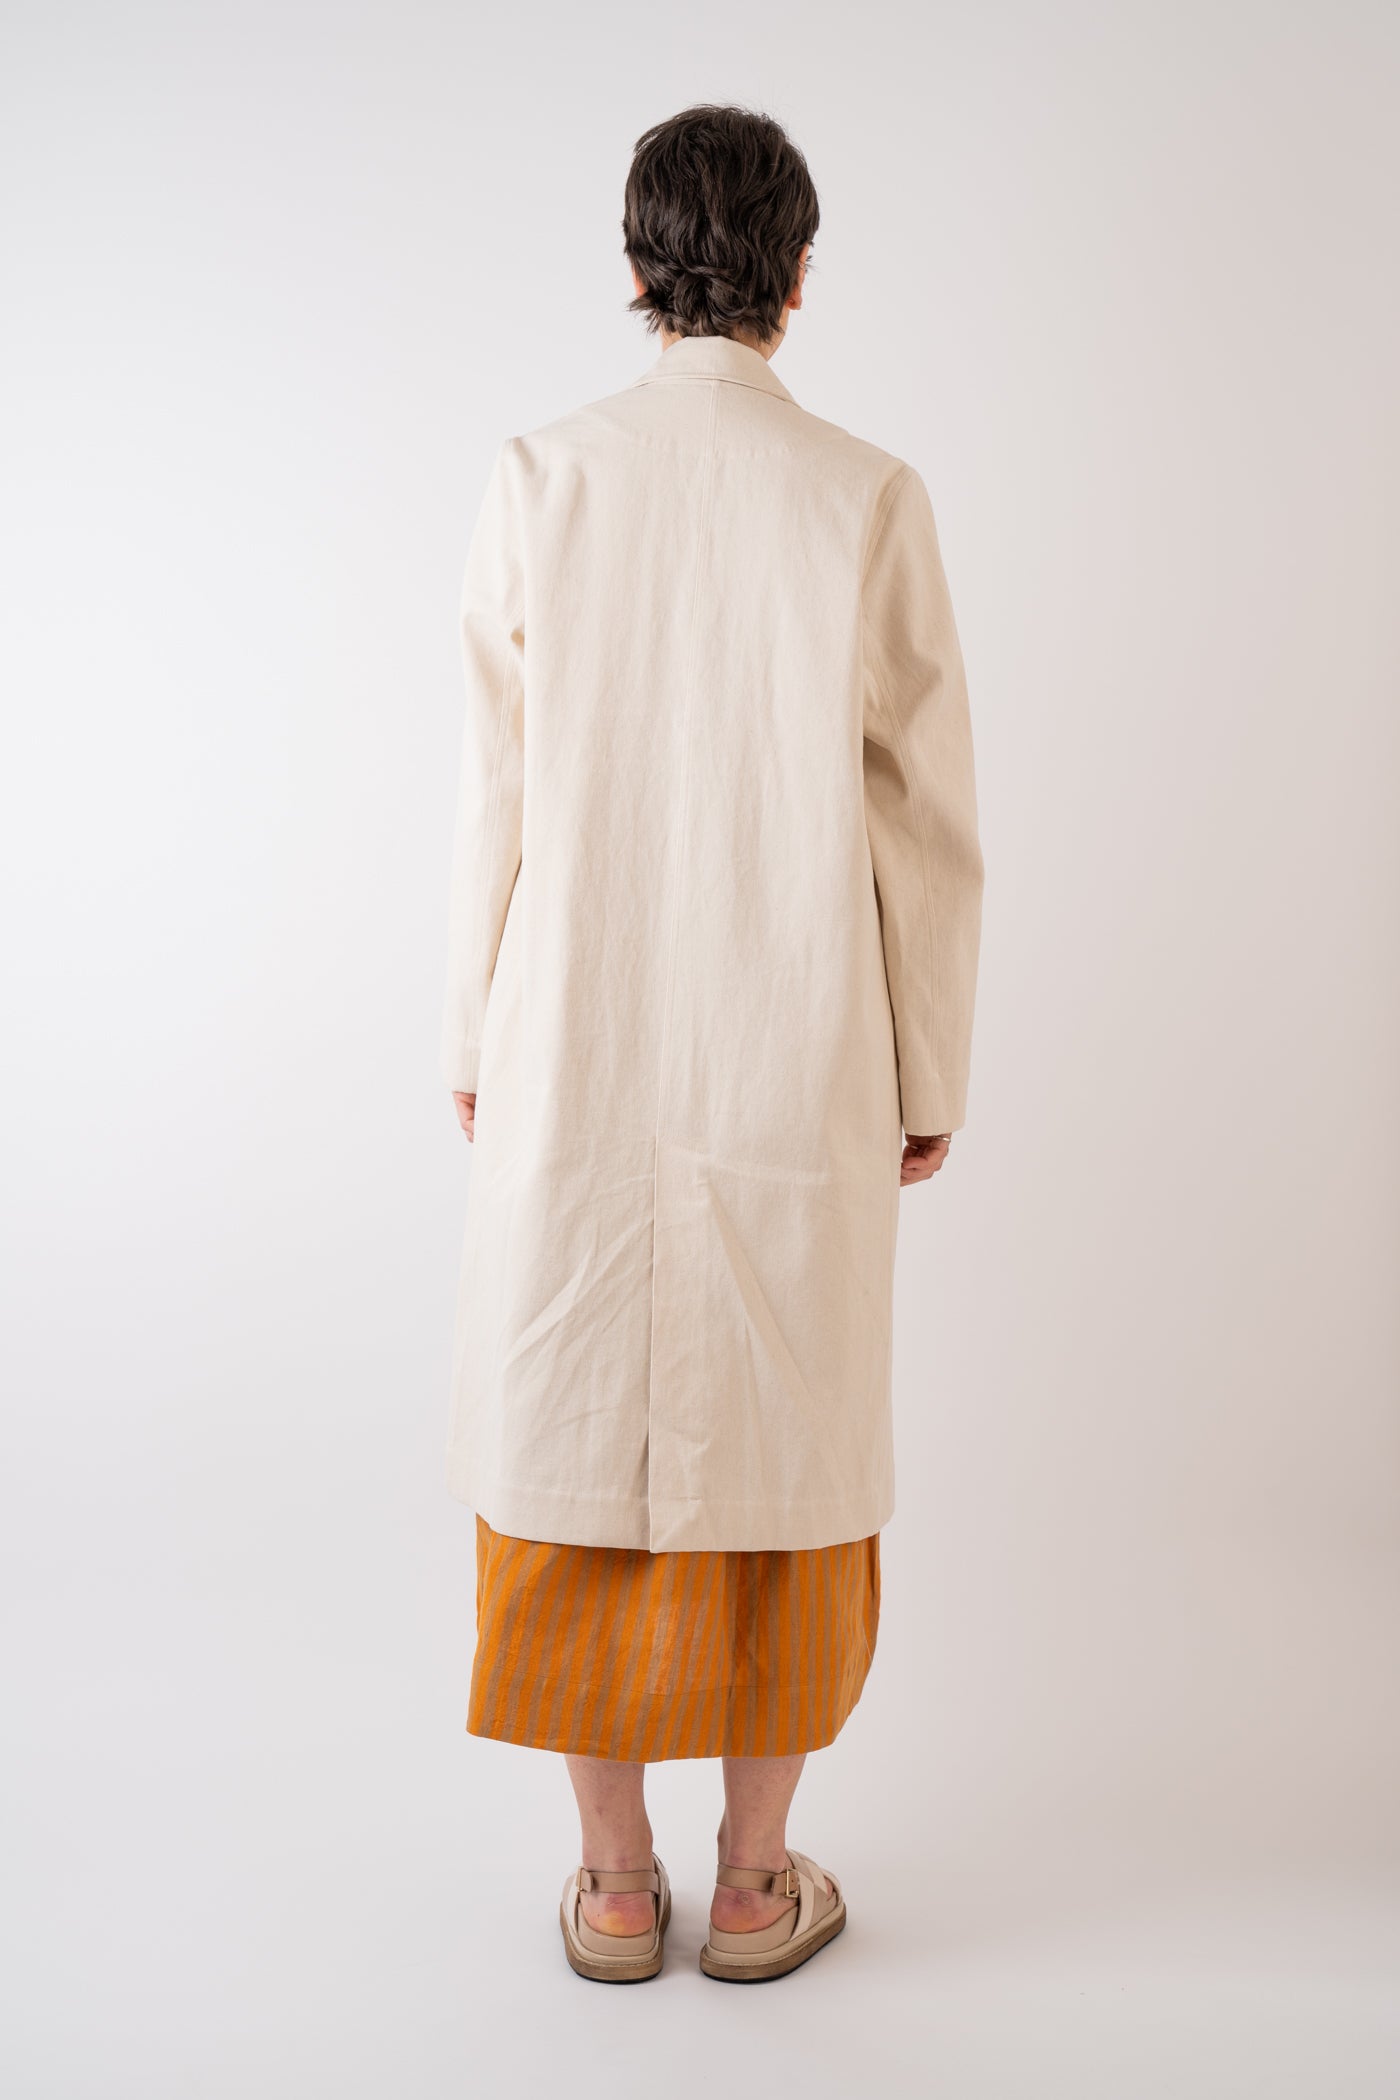 Xi Atelier Organic Cotton Drill Yves Coat in Ecru handmade in Glasglow